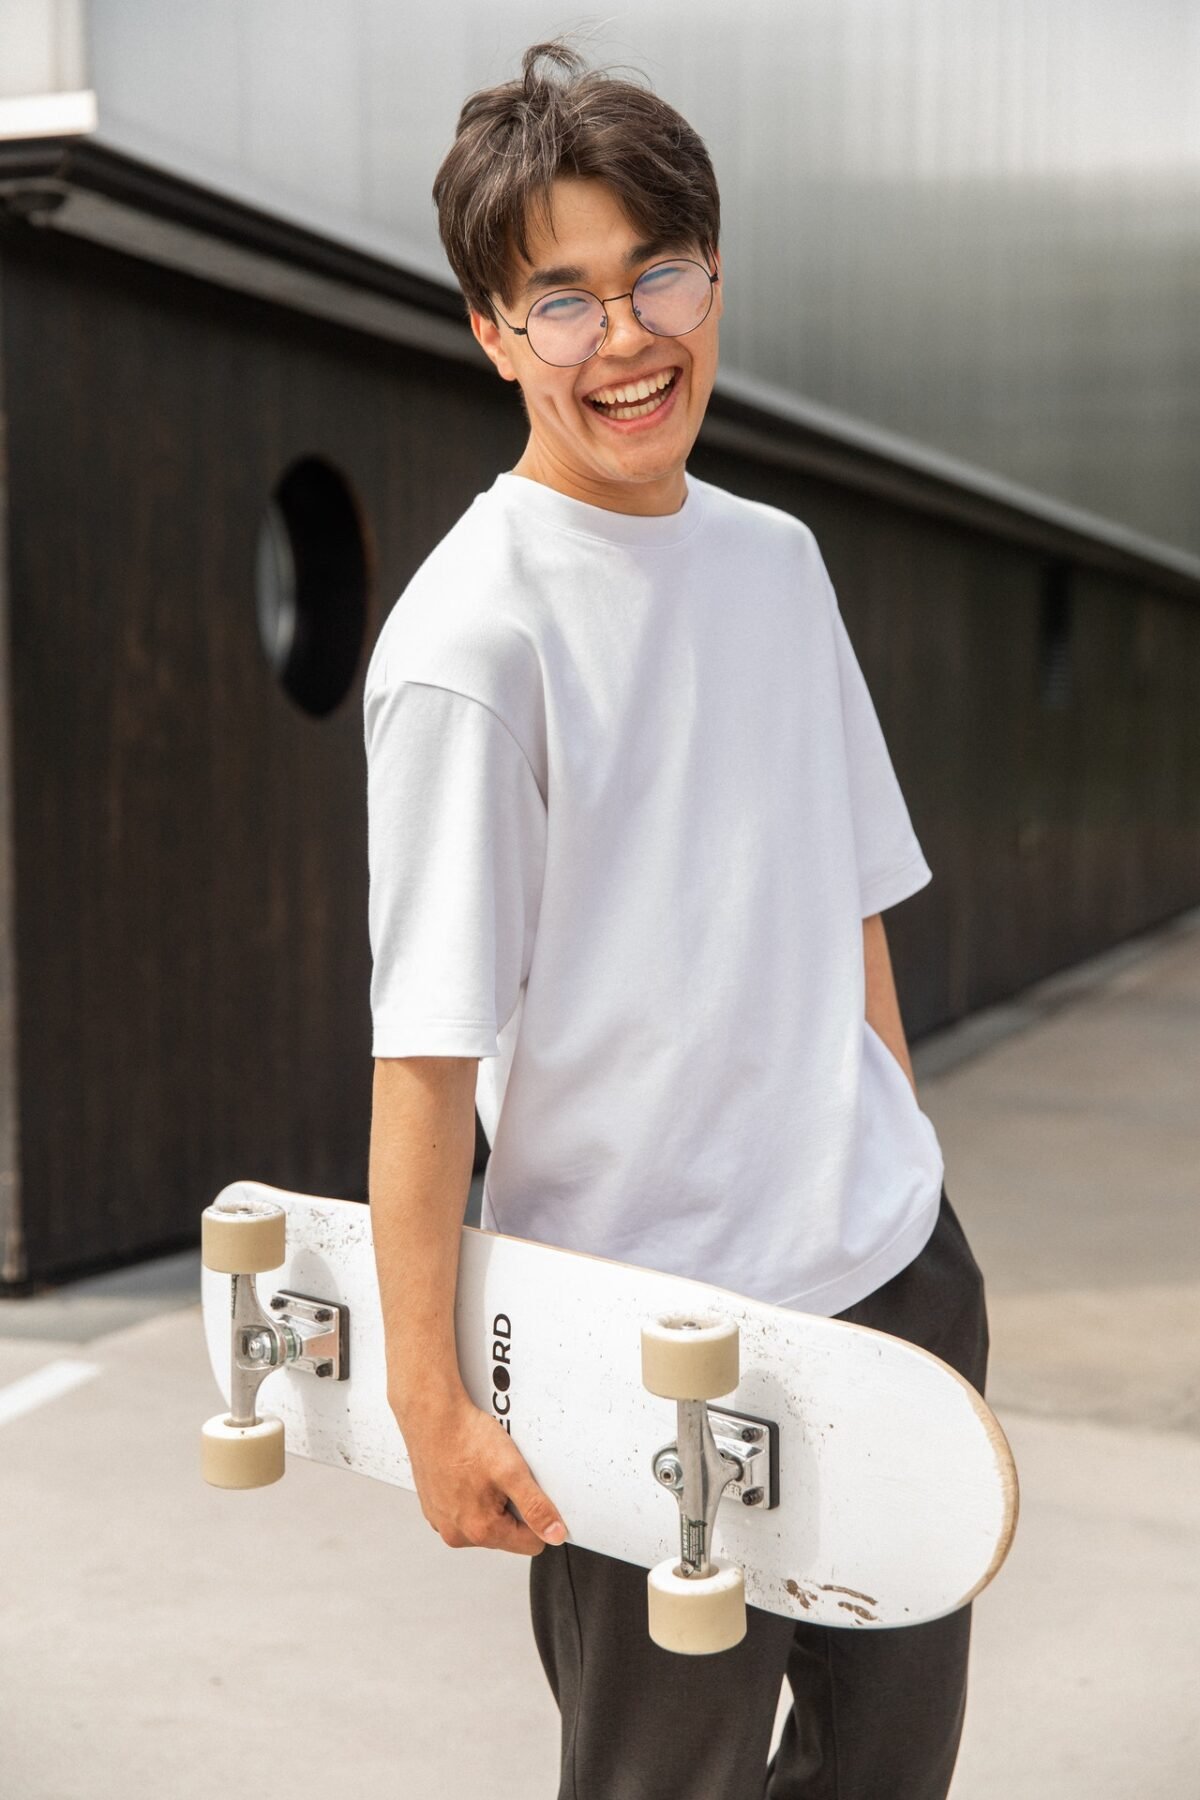 man holding a skateboard